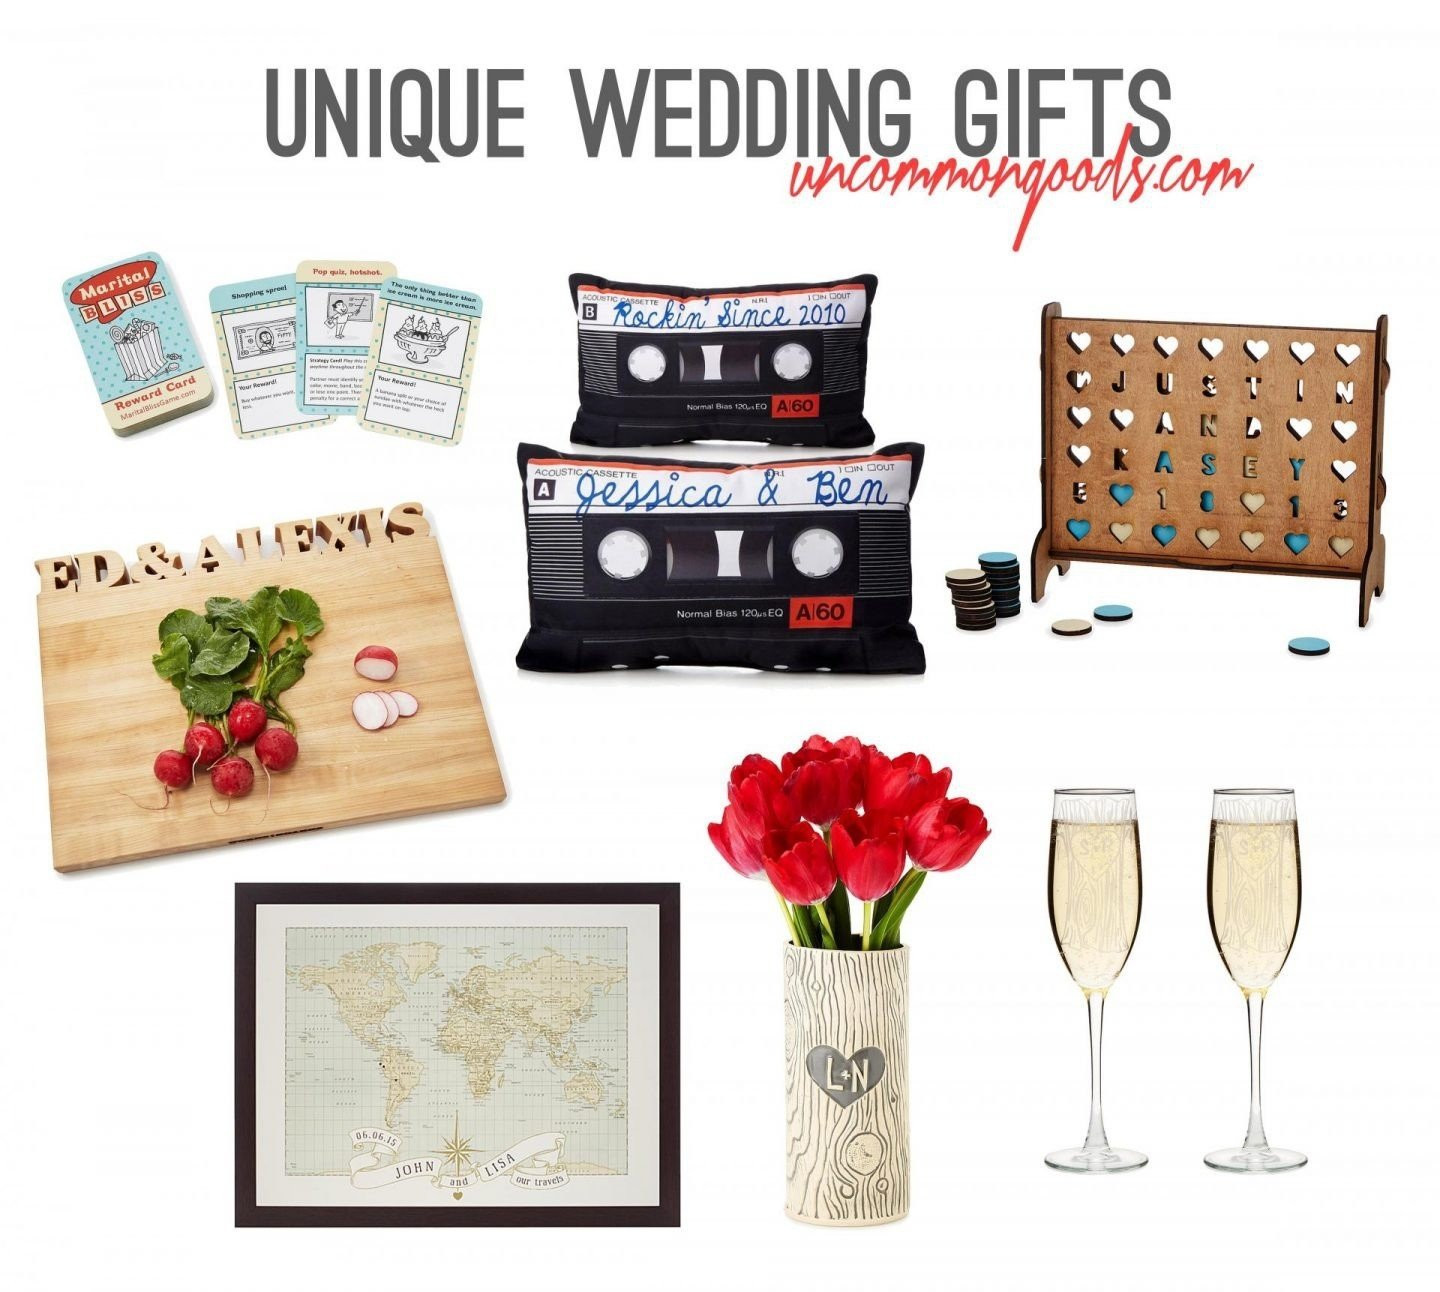 Wedding Gift Ideas For Older Couple
 10 Fashionable Wedding Gift Ideas For Second Marriages 2019